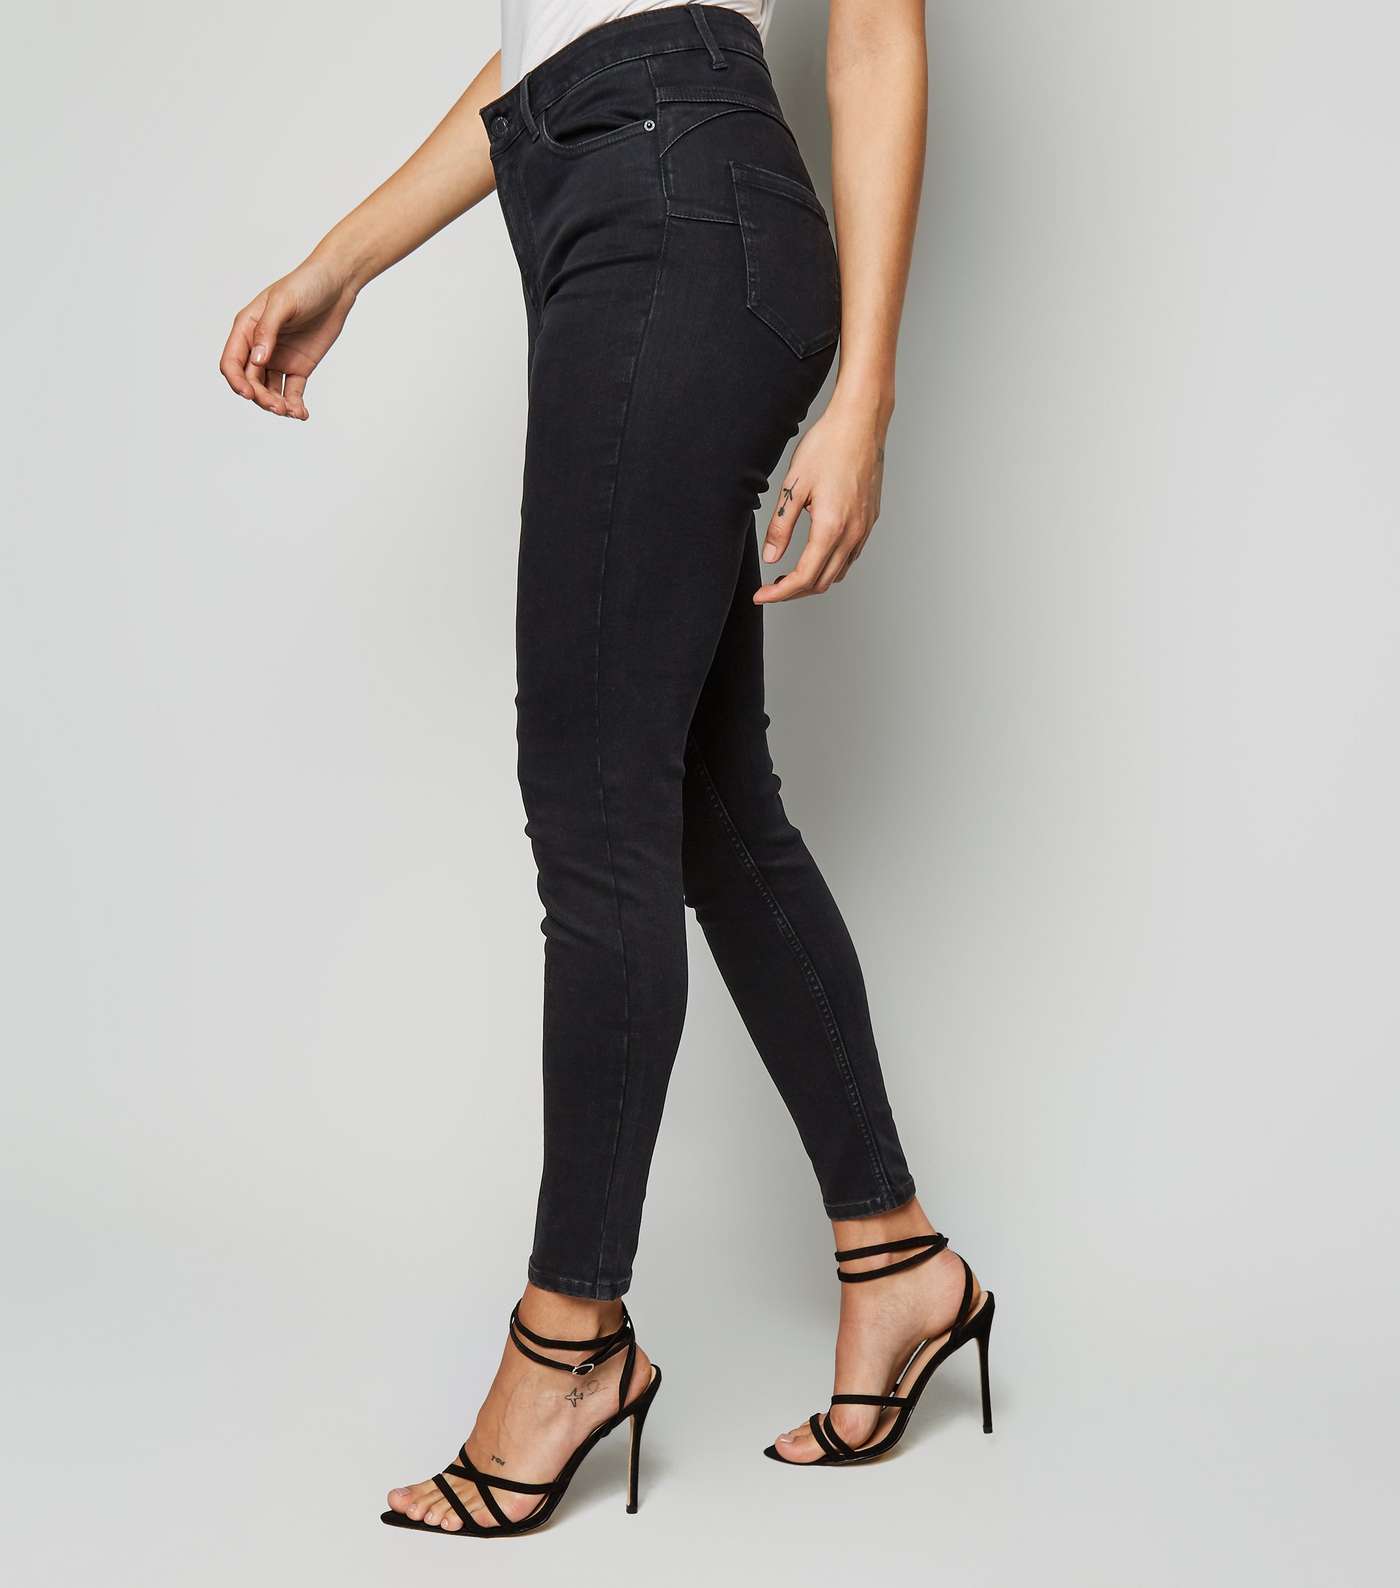 Black 'Lift & Shape' Jenna Skinny Jeans Image 5